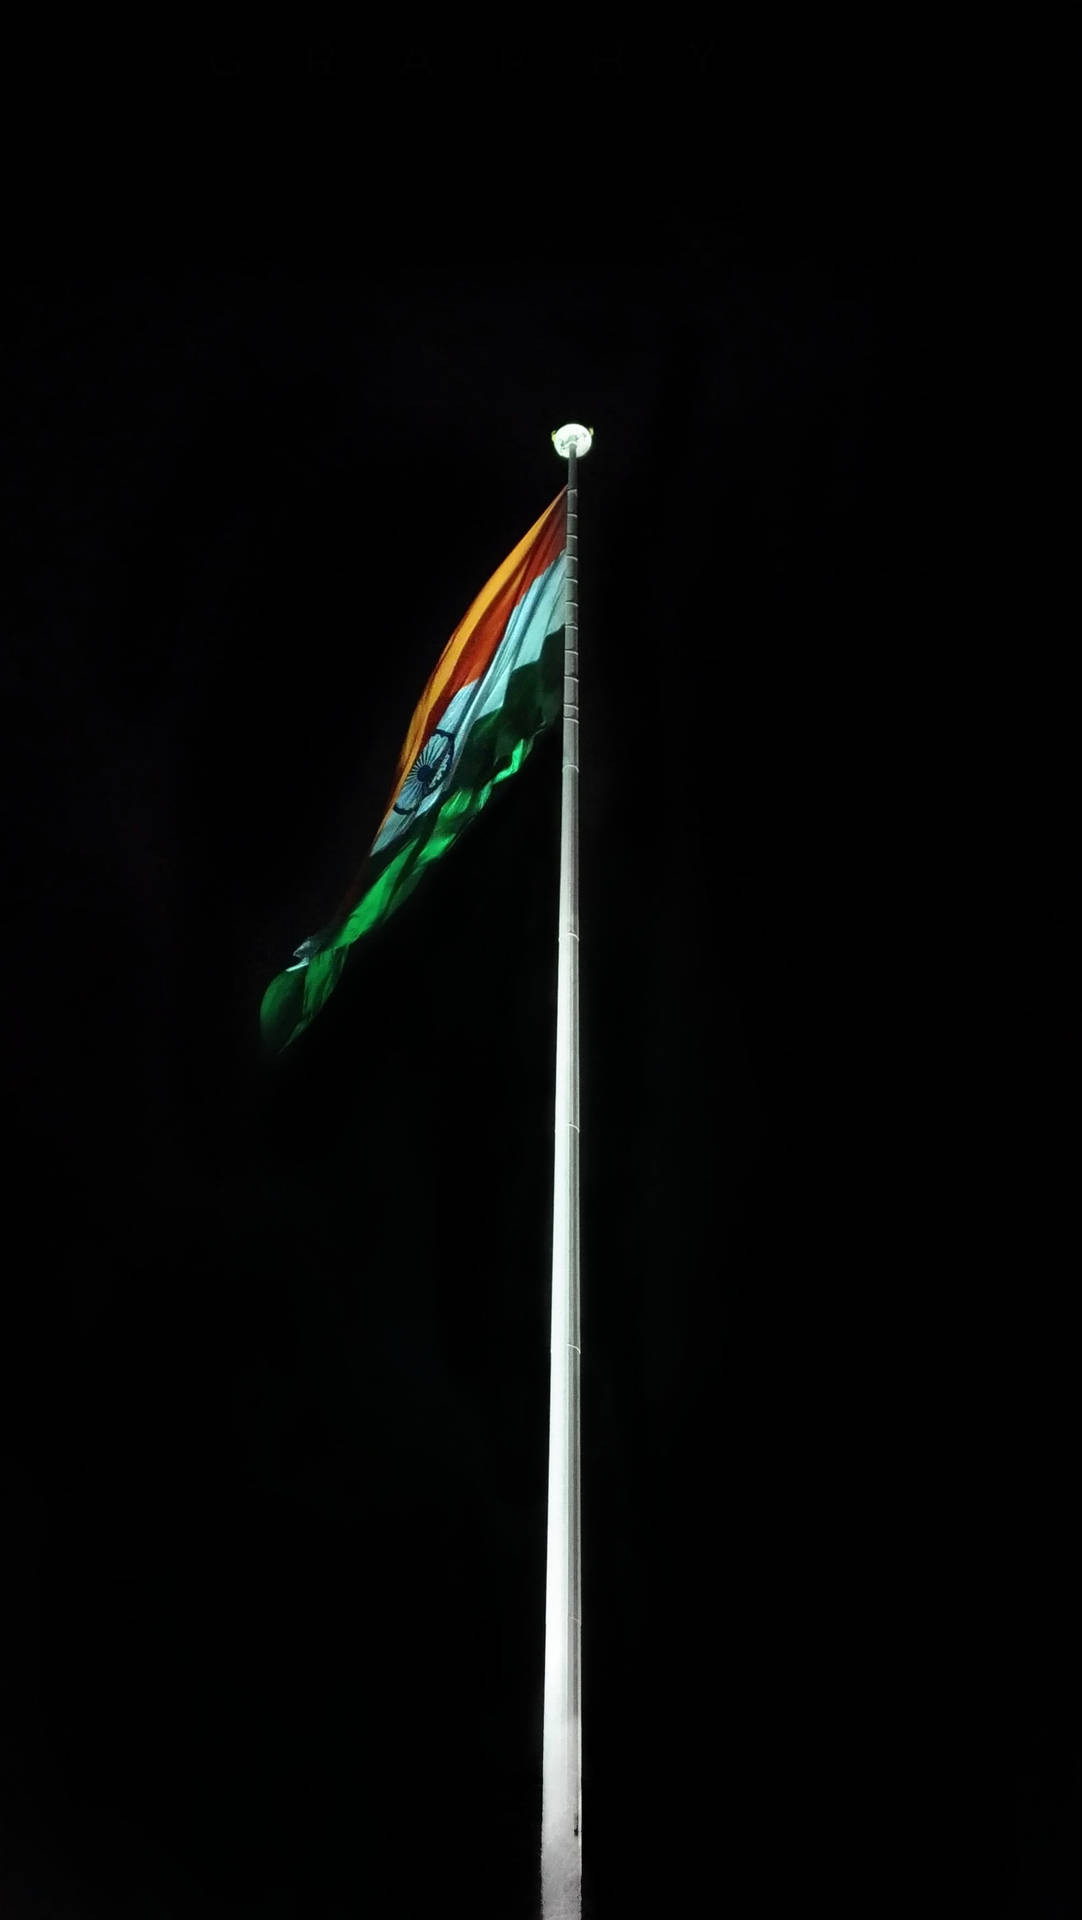 Silver Flagpole Indian Flag 4k Background